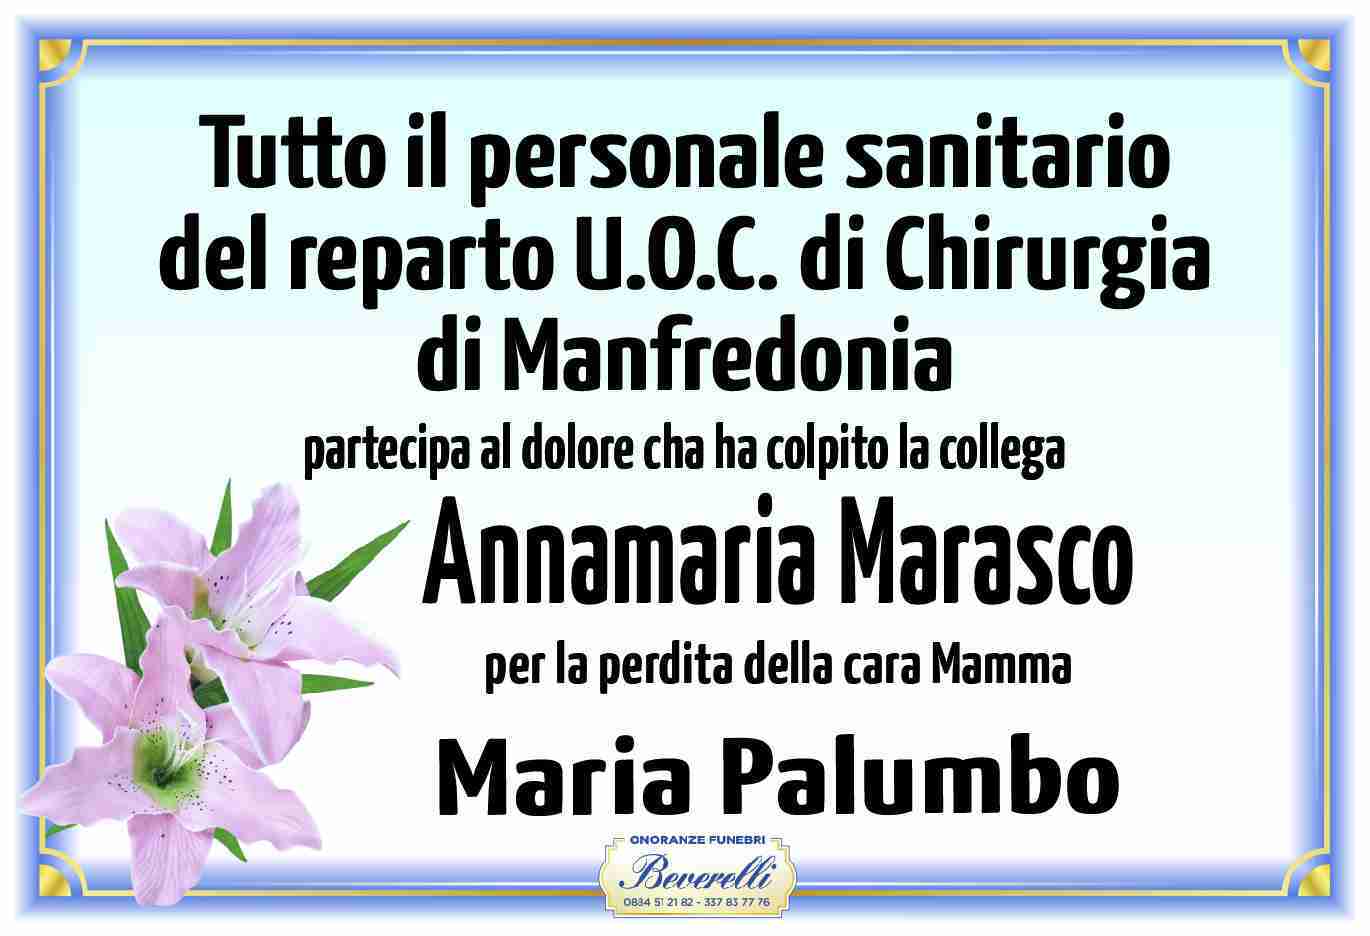 Maria Palumbo